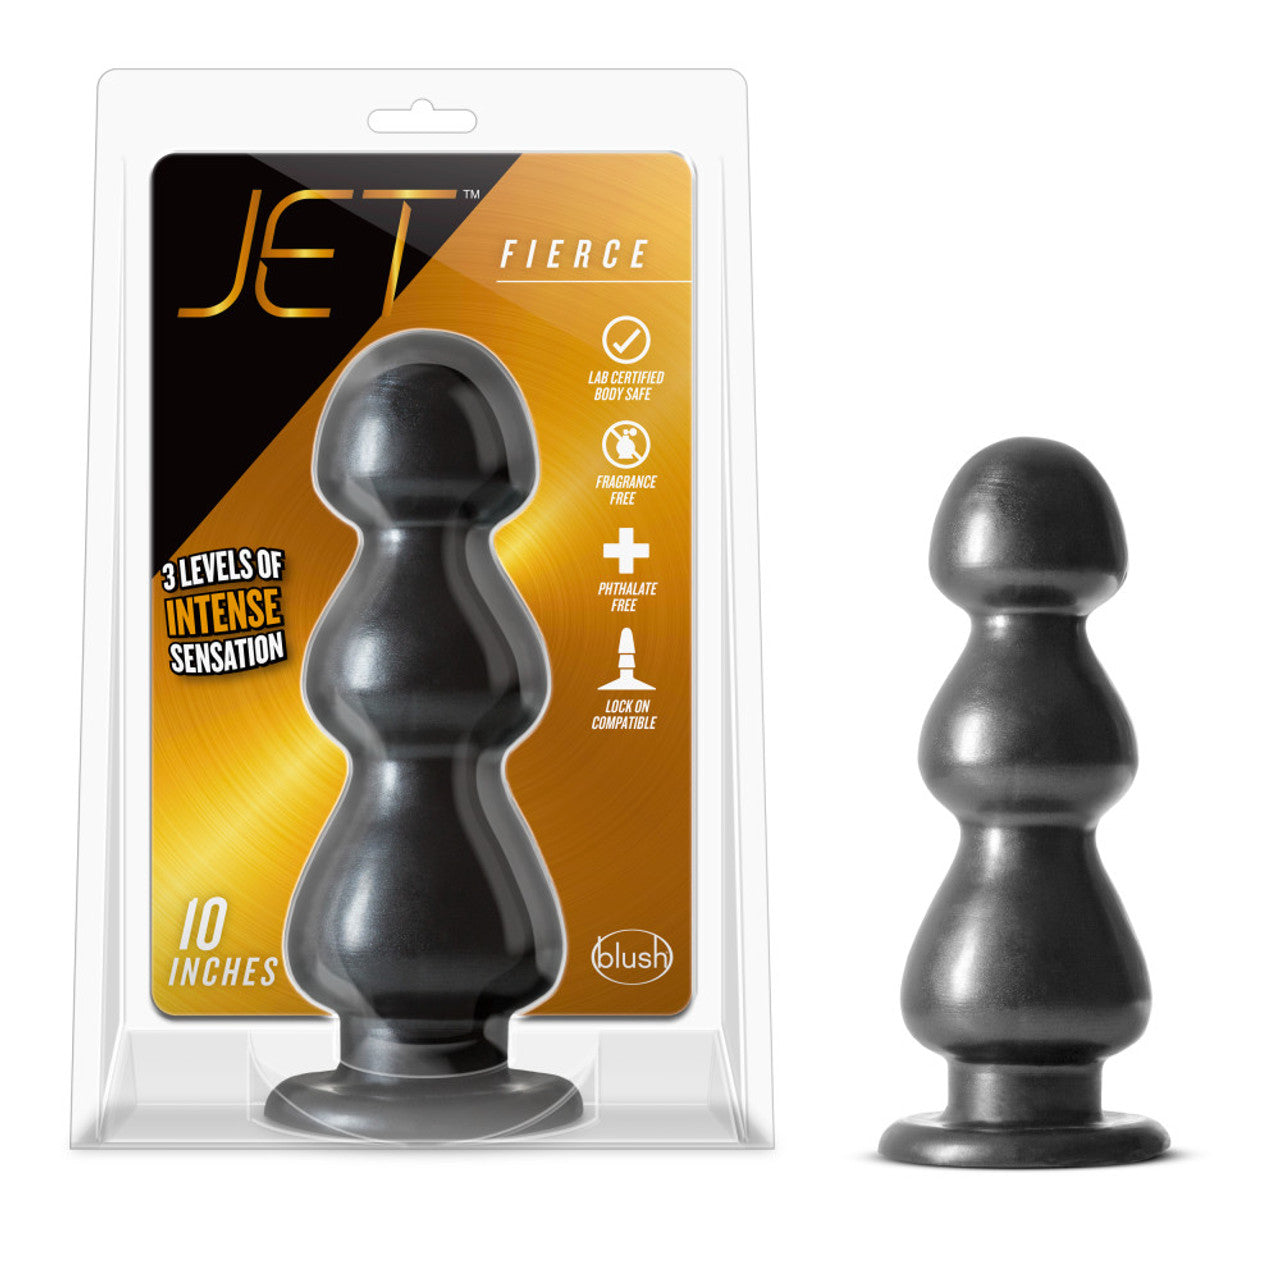 Jet - Fierce - Carbon Metallic Black - Thorn & Feather Sex Toy Canada